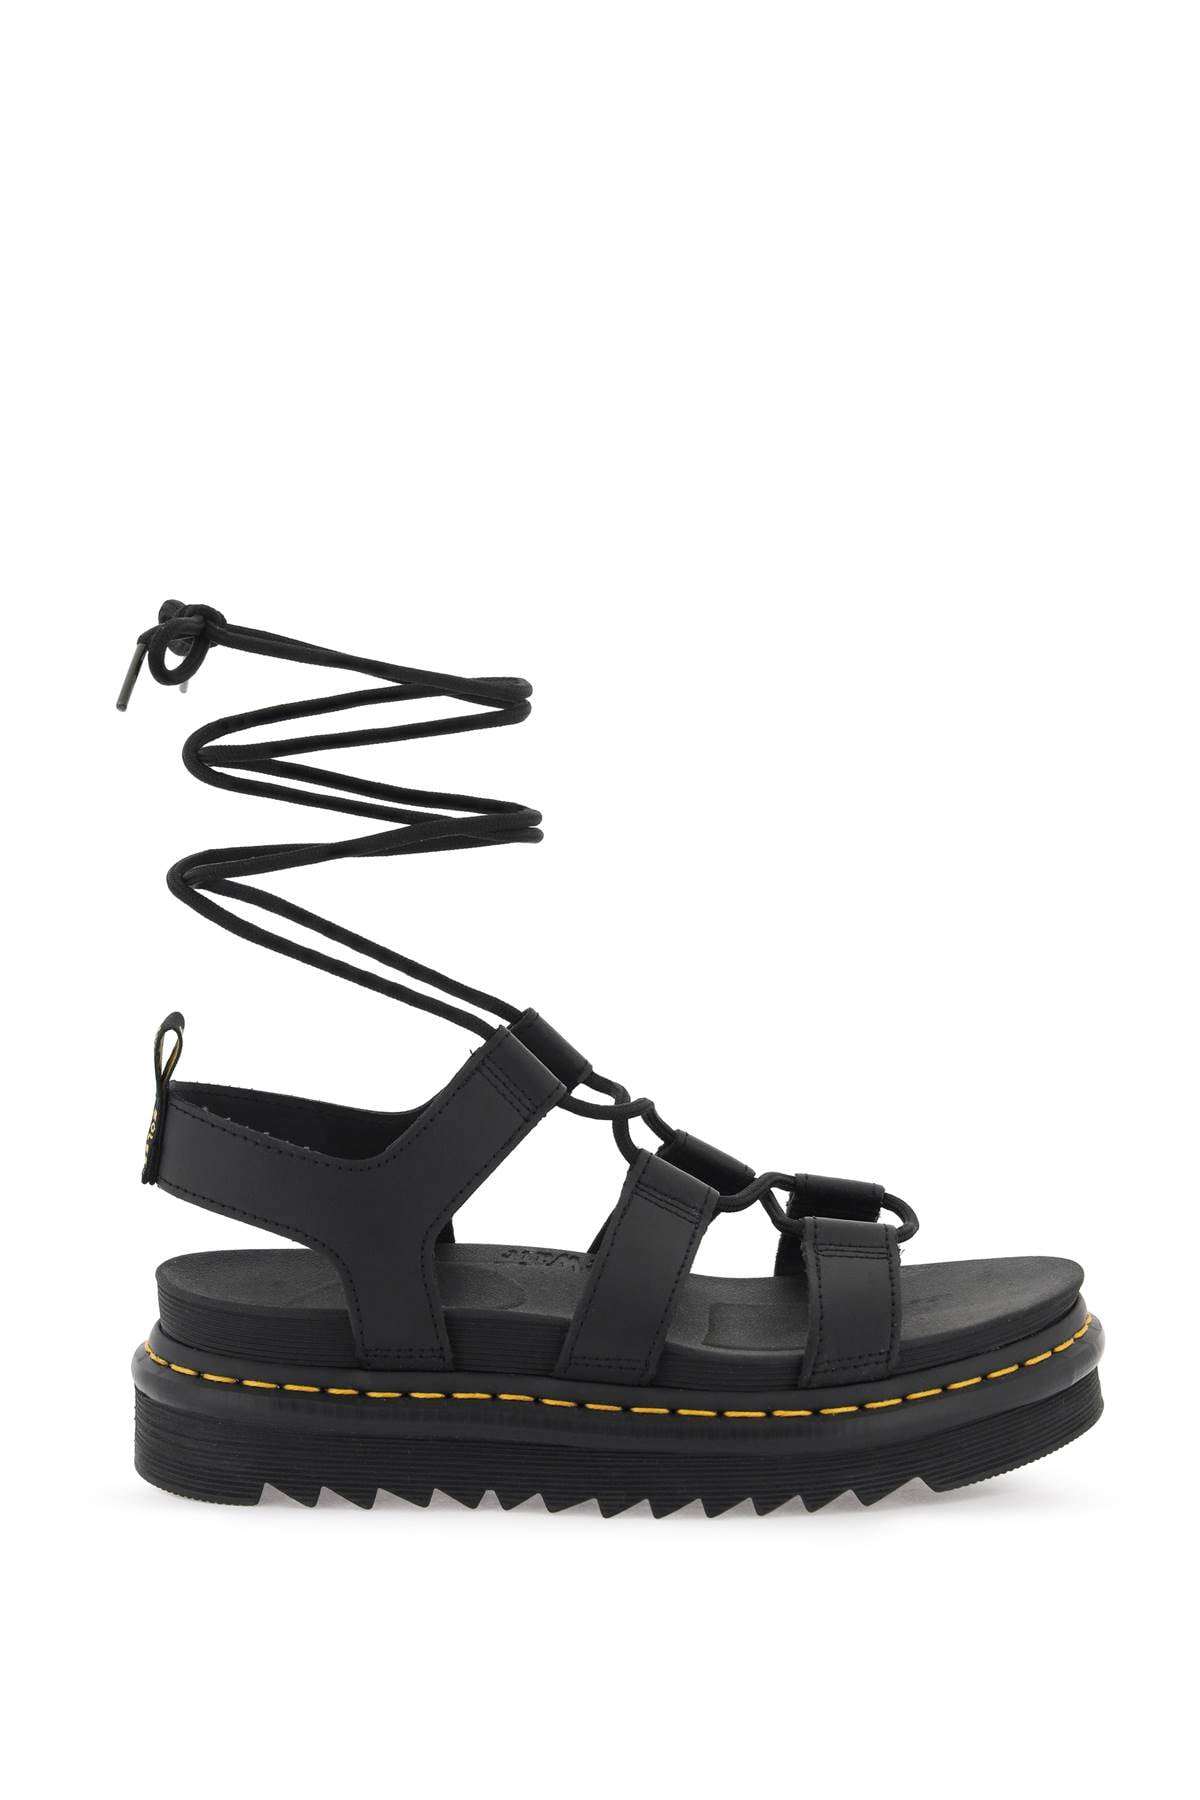 Dr.Martens Nartilla Hydro Leather Gladiator Sandals Women - Walmart.com